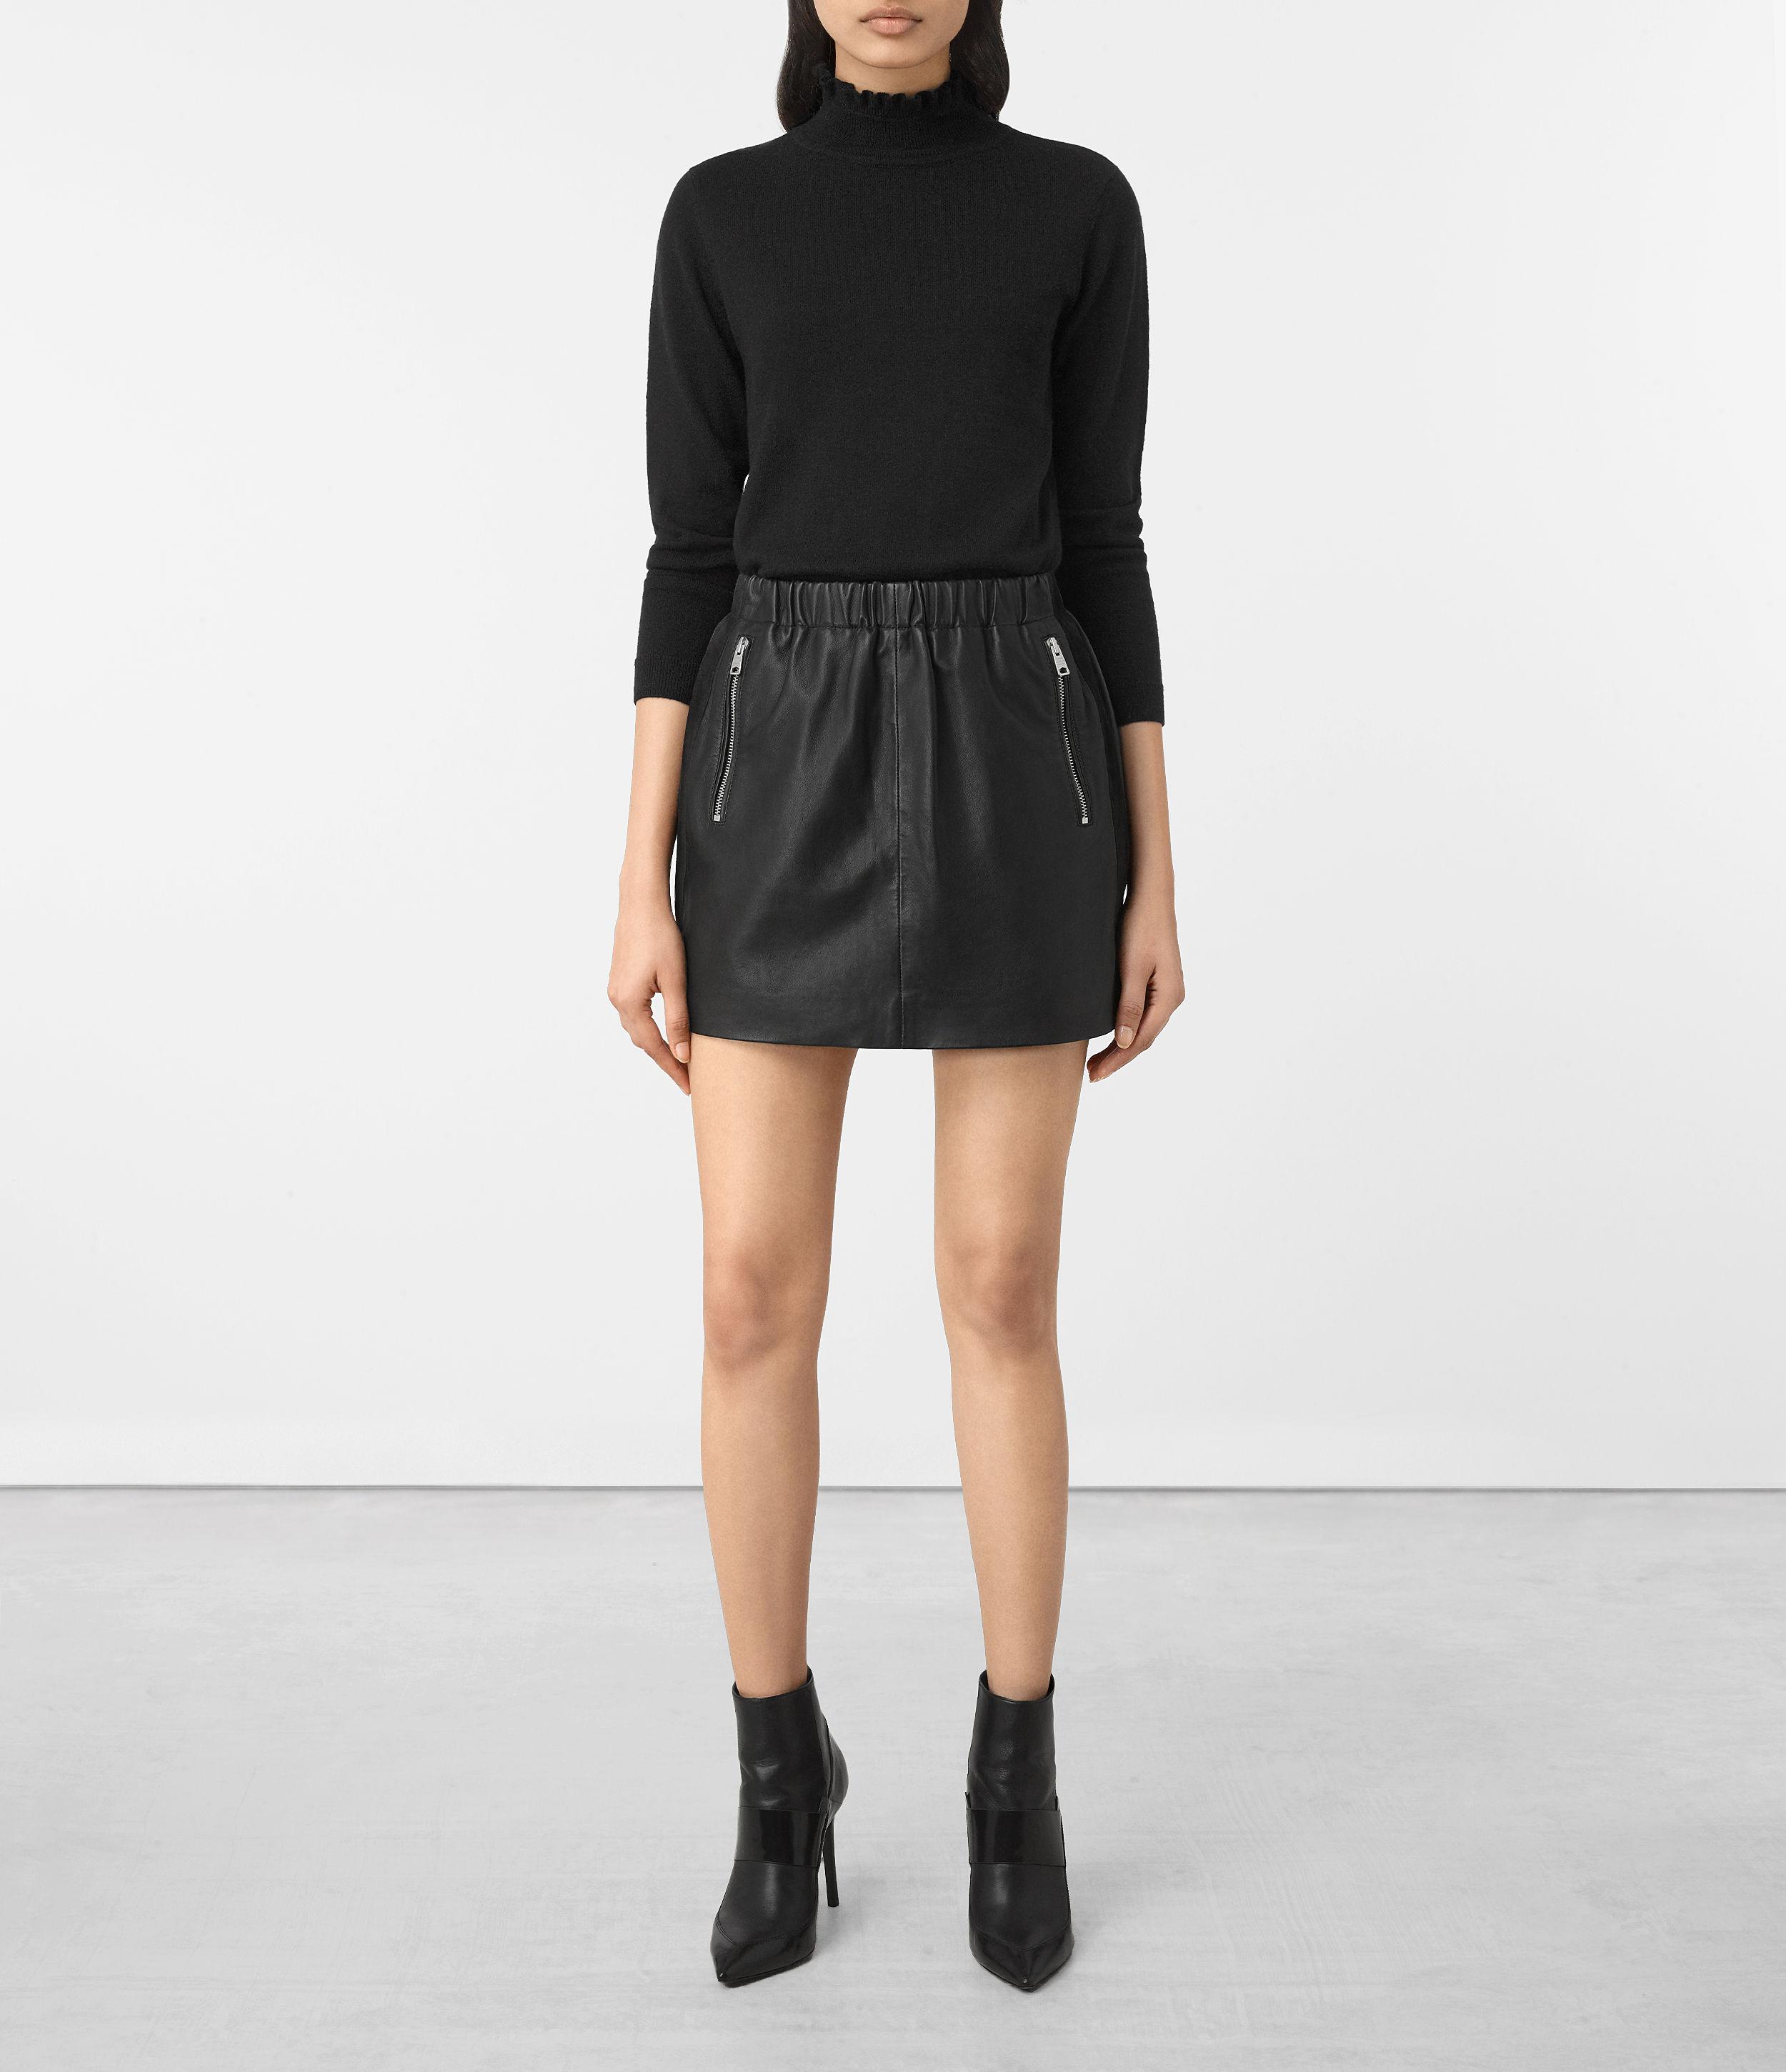 Lyst - Allsaints Suko Leather Skirt in Black